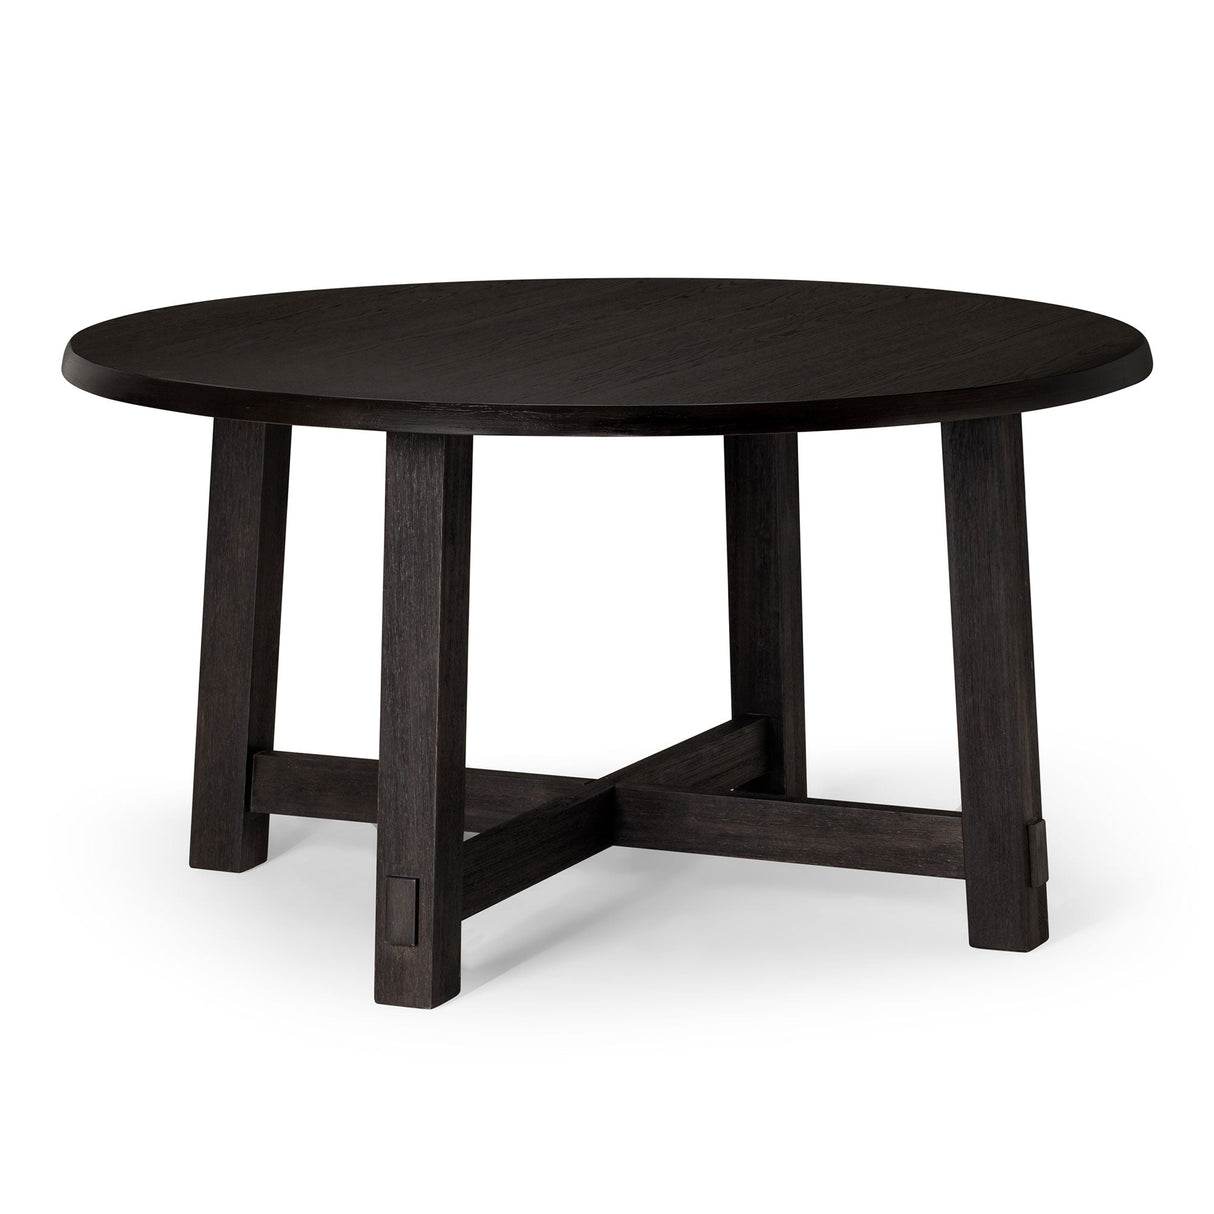 Maven Lane Sasha Round Wooden Dining Table in Weathered Black Finish